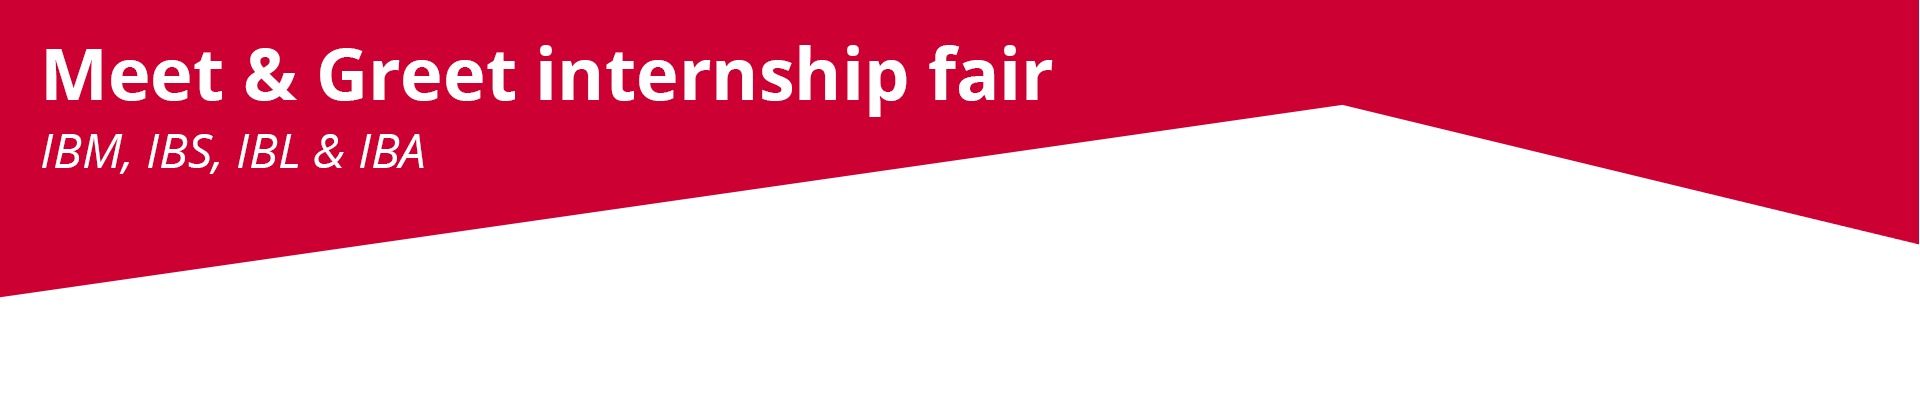 Meet & greet internship fair 2020 - jaar 2